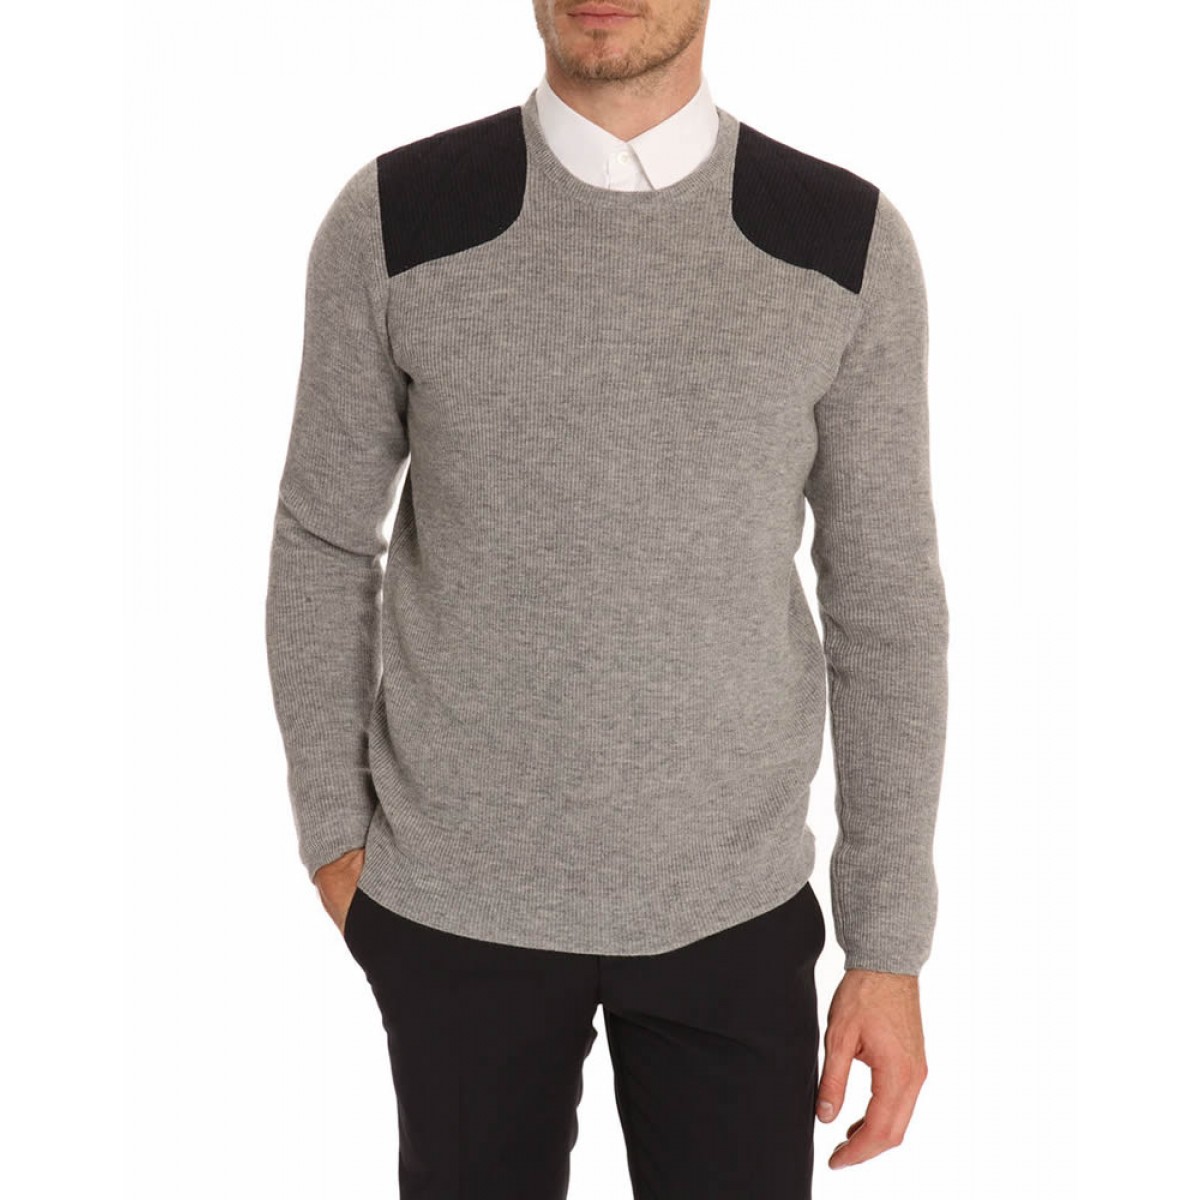 Men Cashmere Knit Pullover with Shoulder Pad